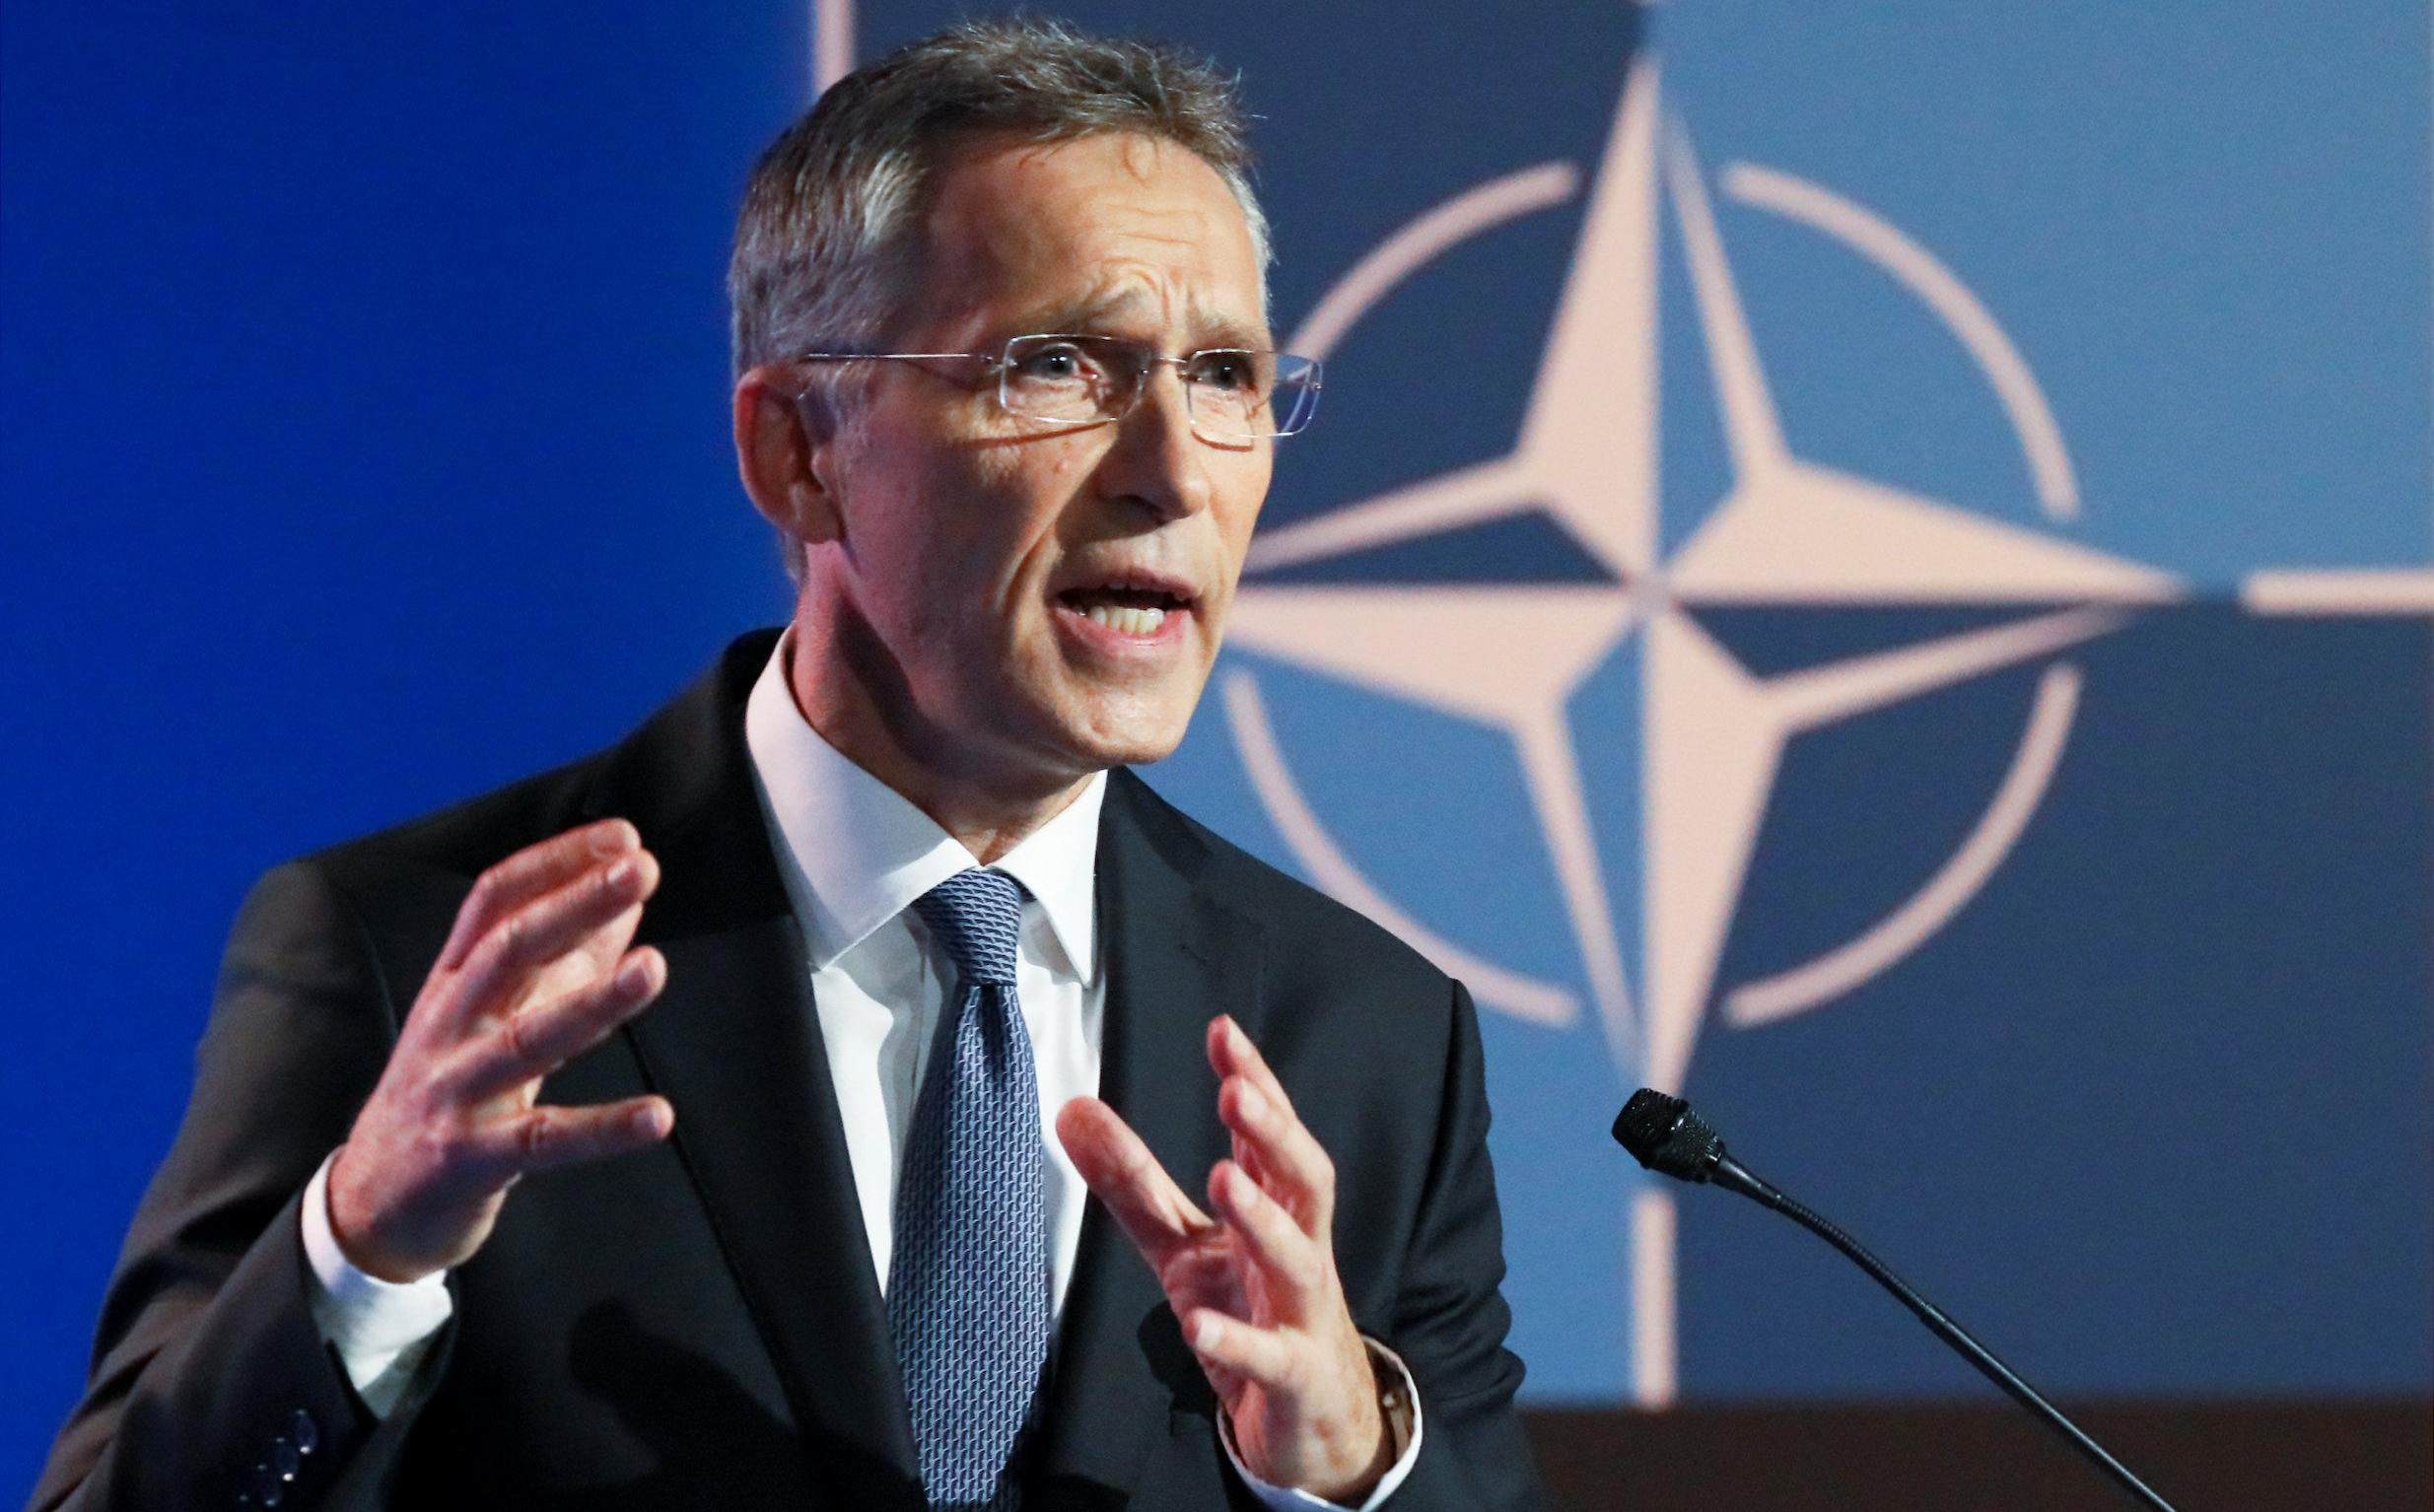 NATO HITNO REAGOVAO NA OTKAZIVANJE VOJNIH VEŽBI NA SINJAJEVINI! Oglasio se Jens Stoltenberg!